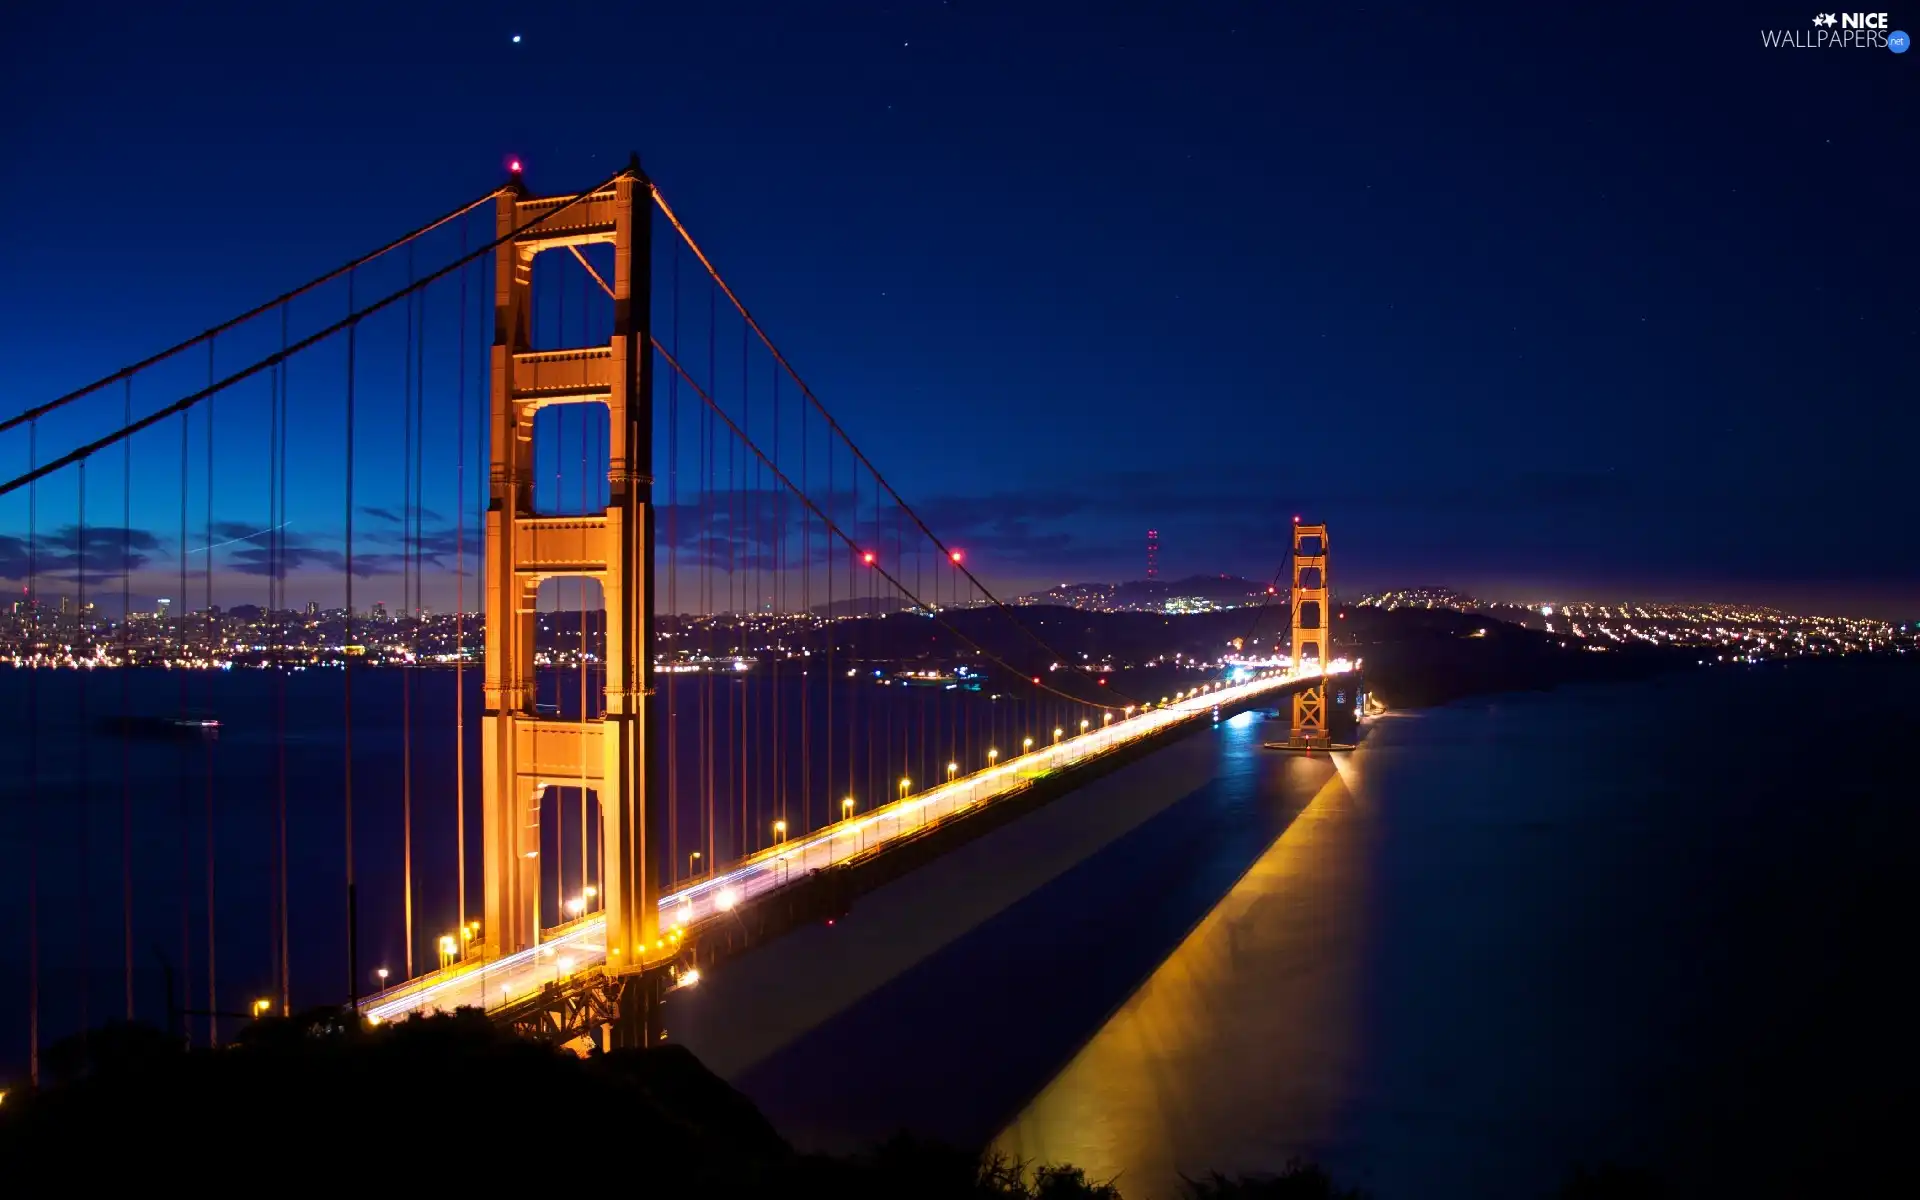 Floodlit, The Golden Gate Bridge